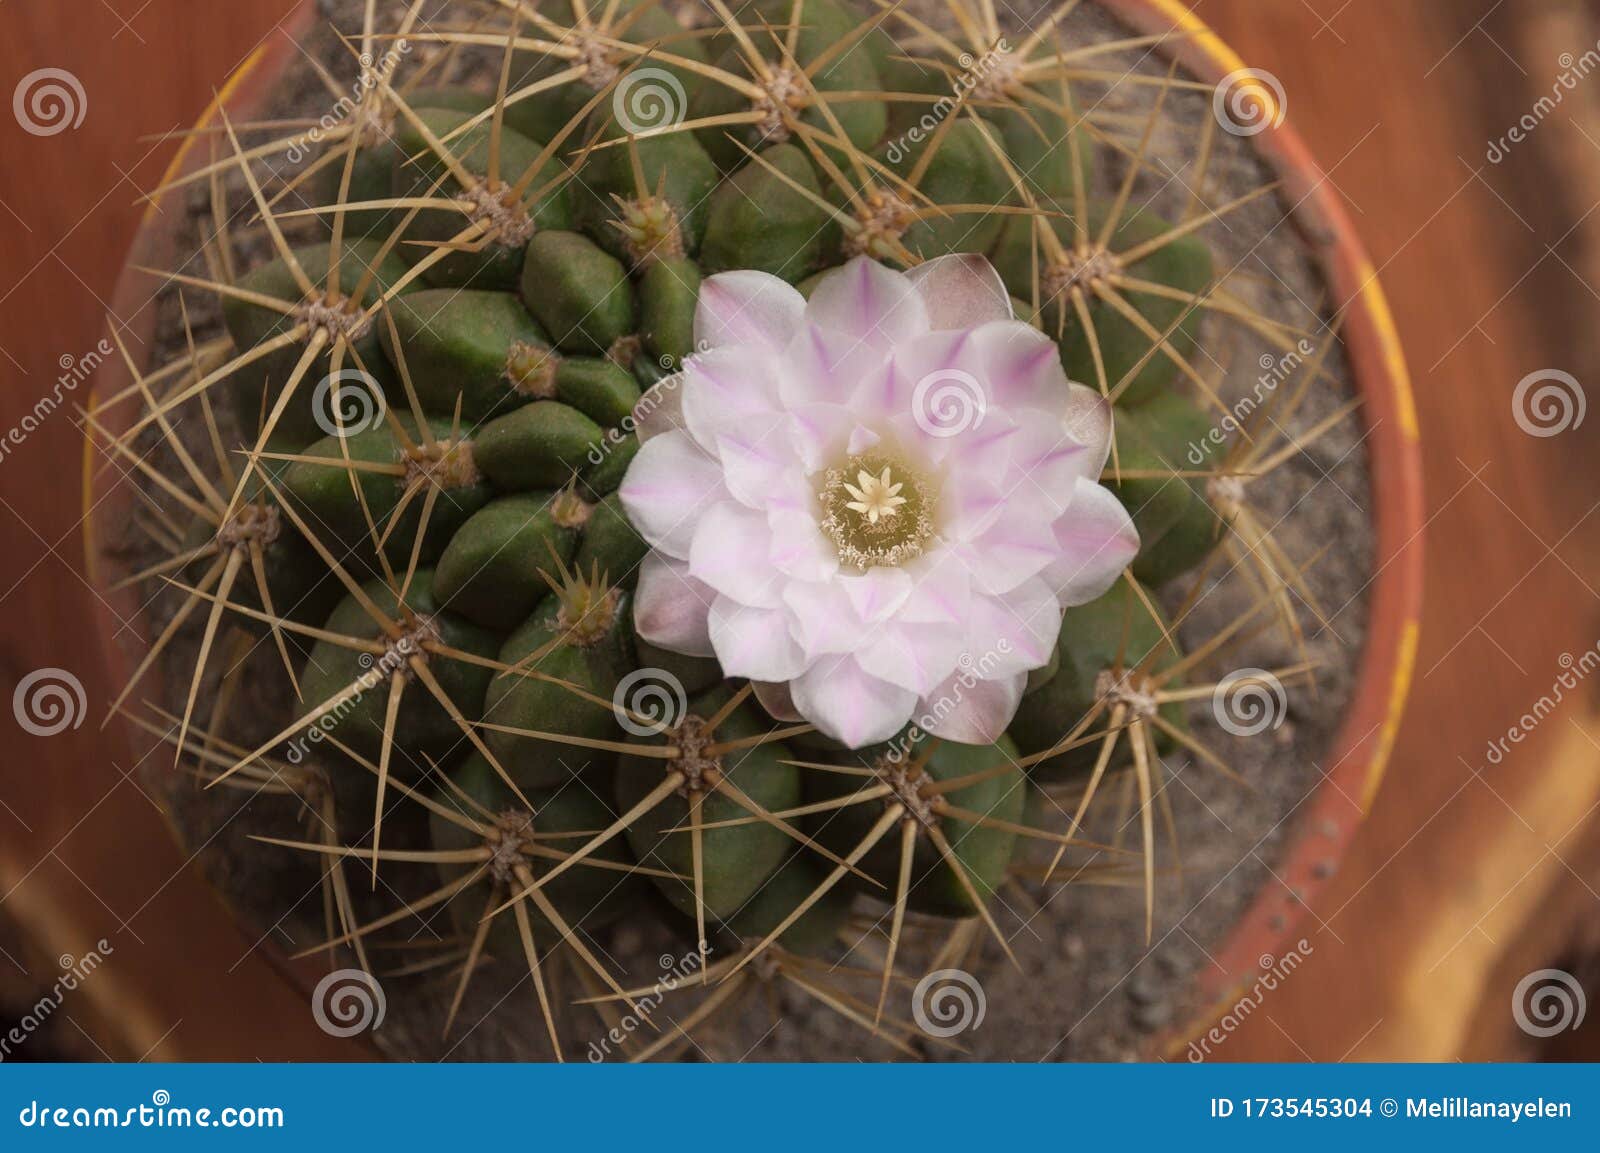 gymnocalycium baldianum dwarf chinese cactus